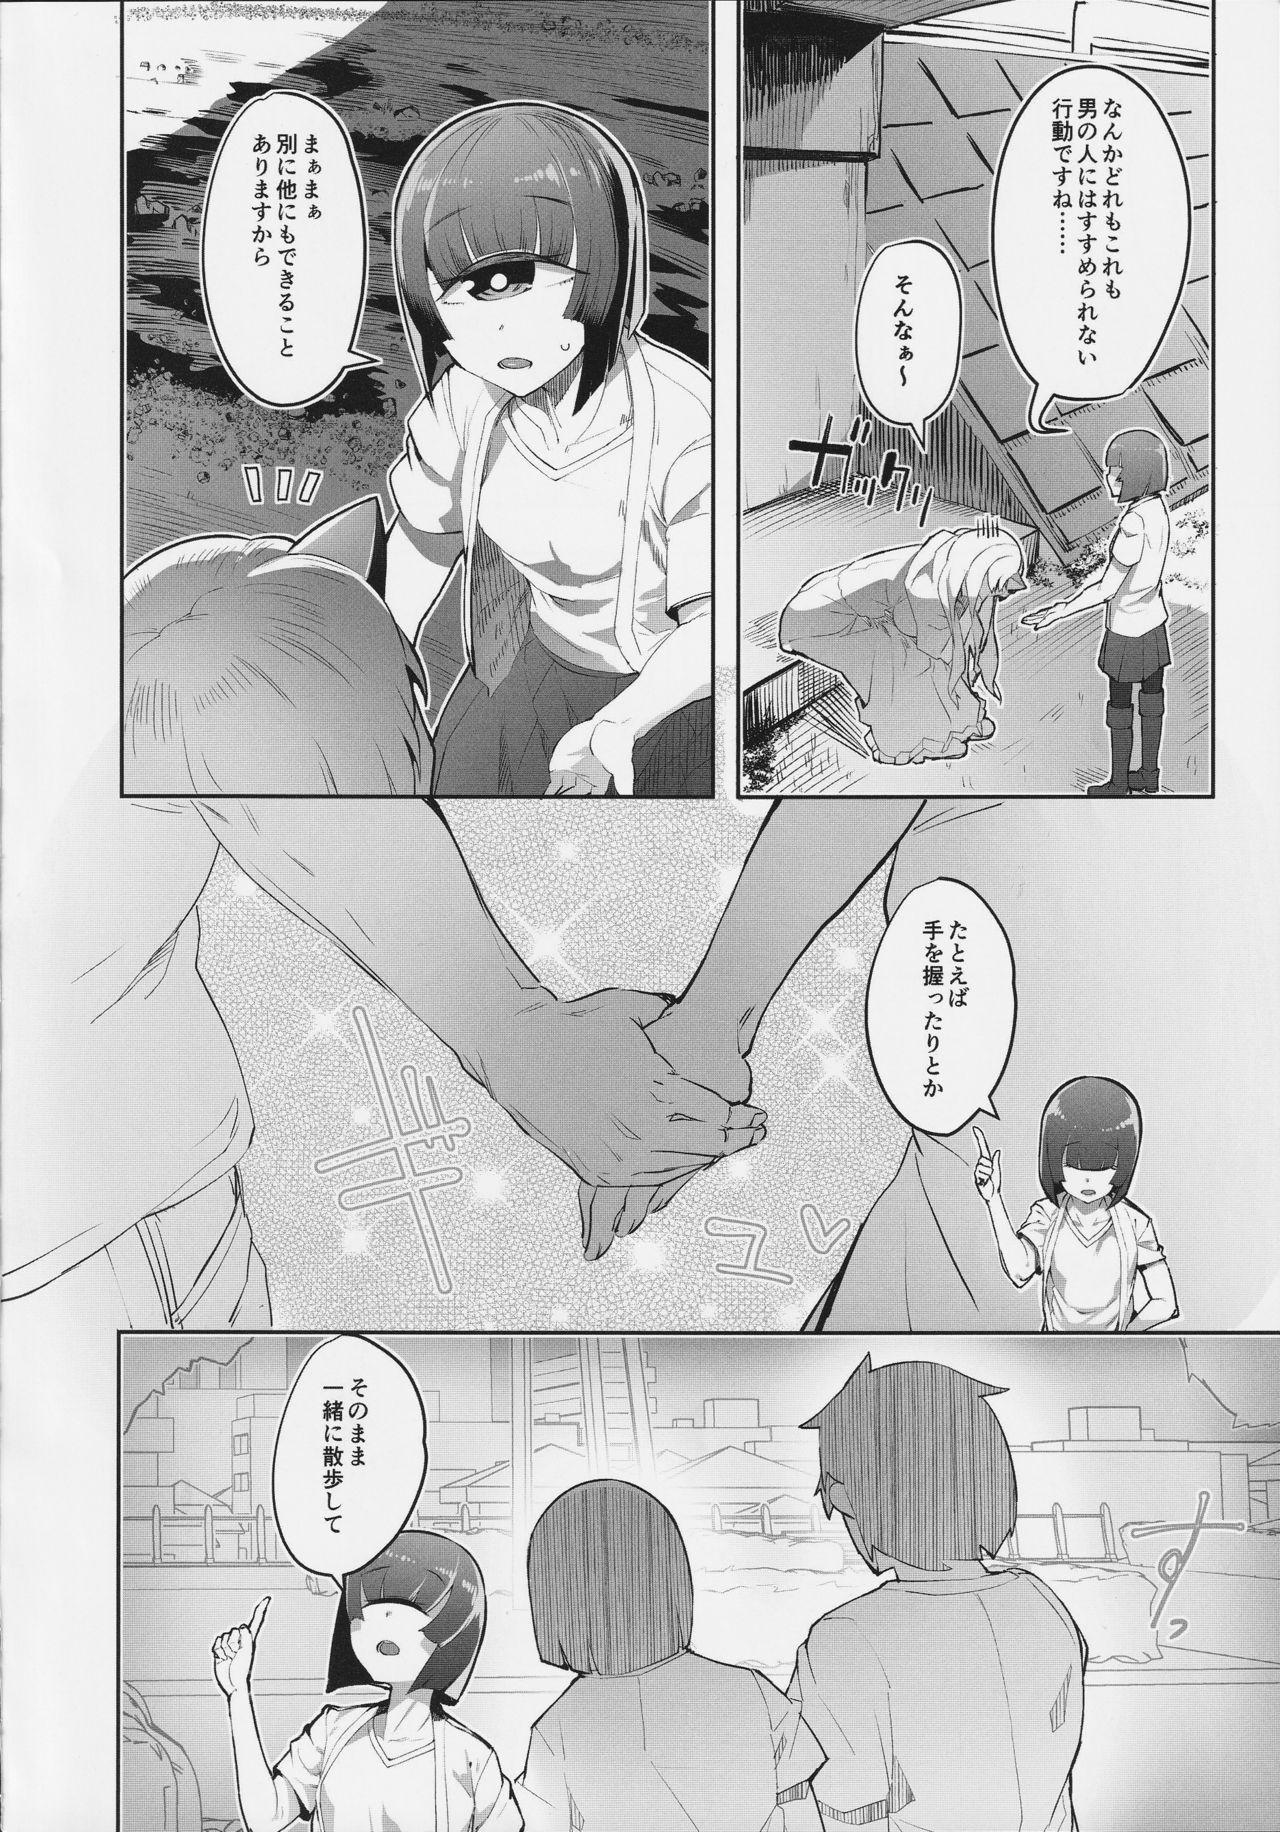 Hair Monster Musume no Iru Nichijou SS ANTHOLOGY - Everyday Life with Monster Girls - Monster musume no iru nichijou Round Ass - Page 9